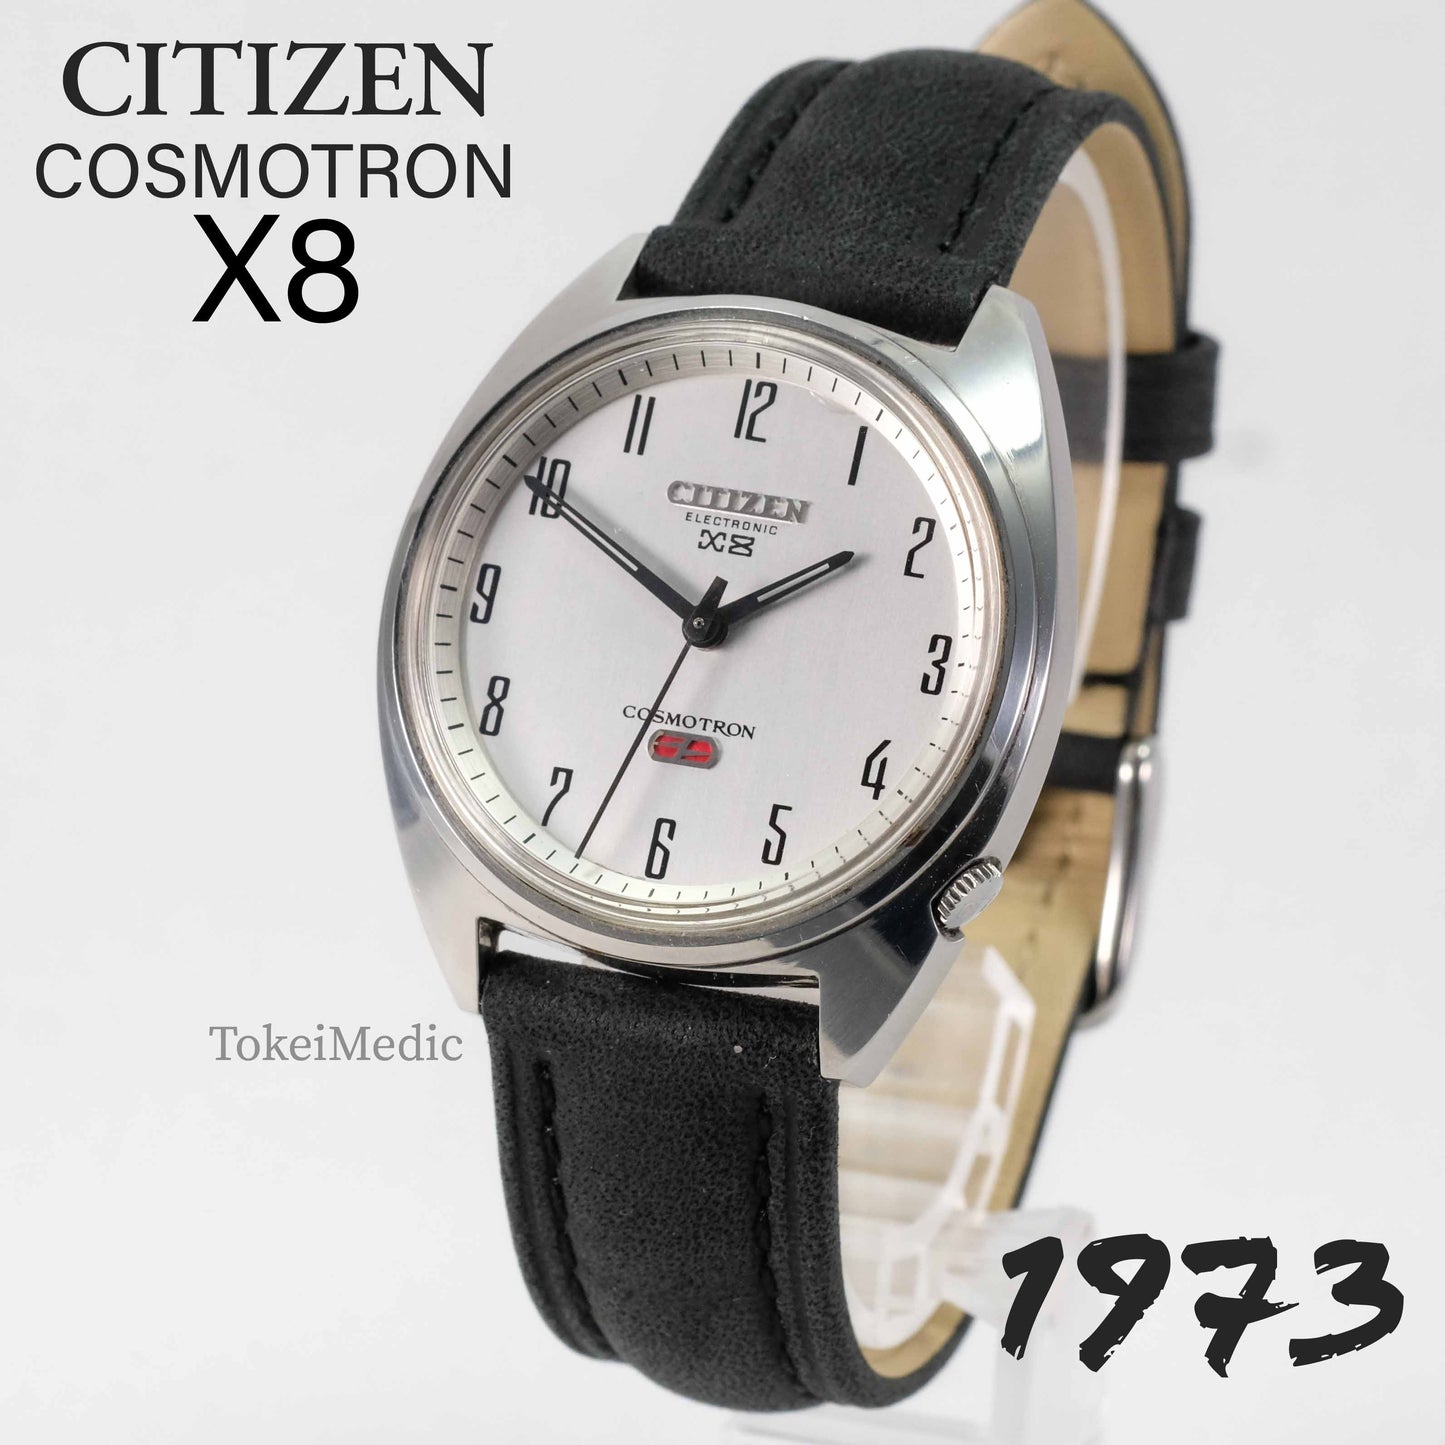 1973 Citizen Cosmotron X8 Electronic 4-810139